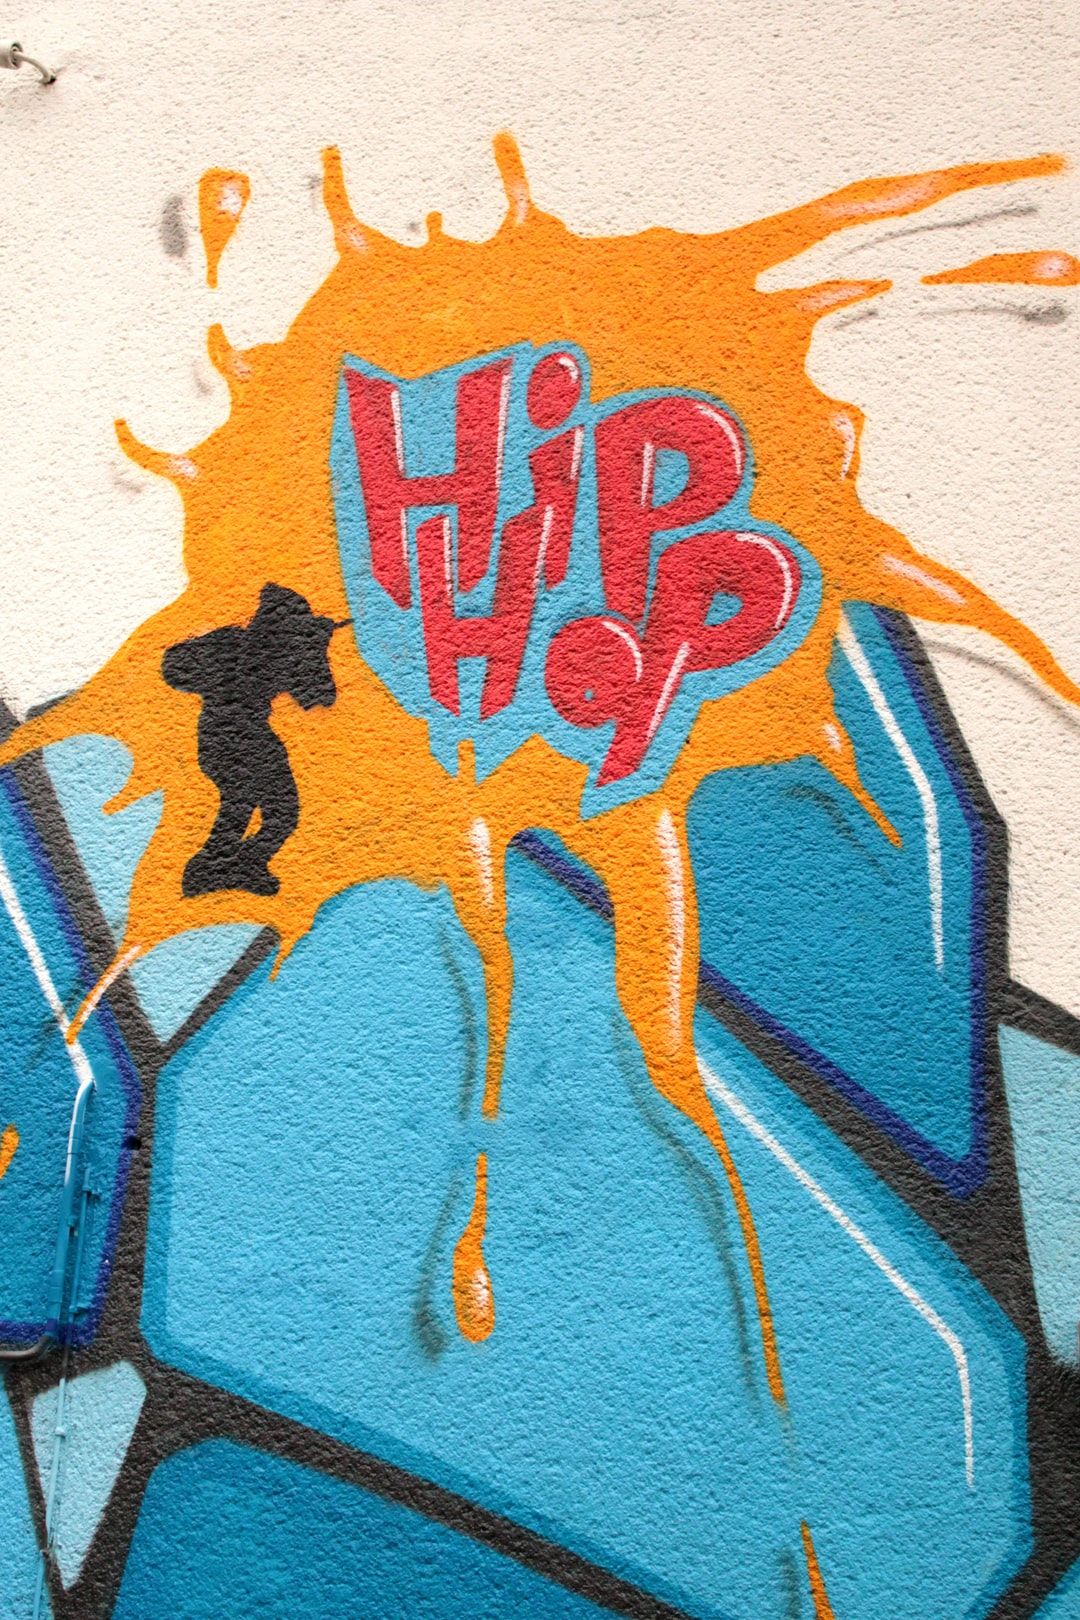 Free Fire Hip Hop Wallpapers Wallpaper Cave